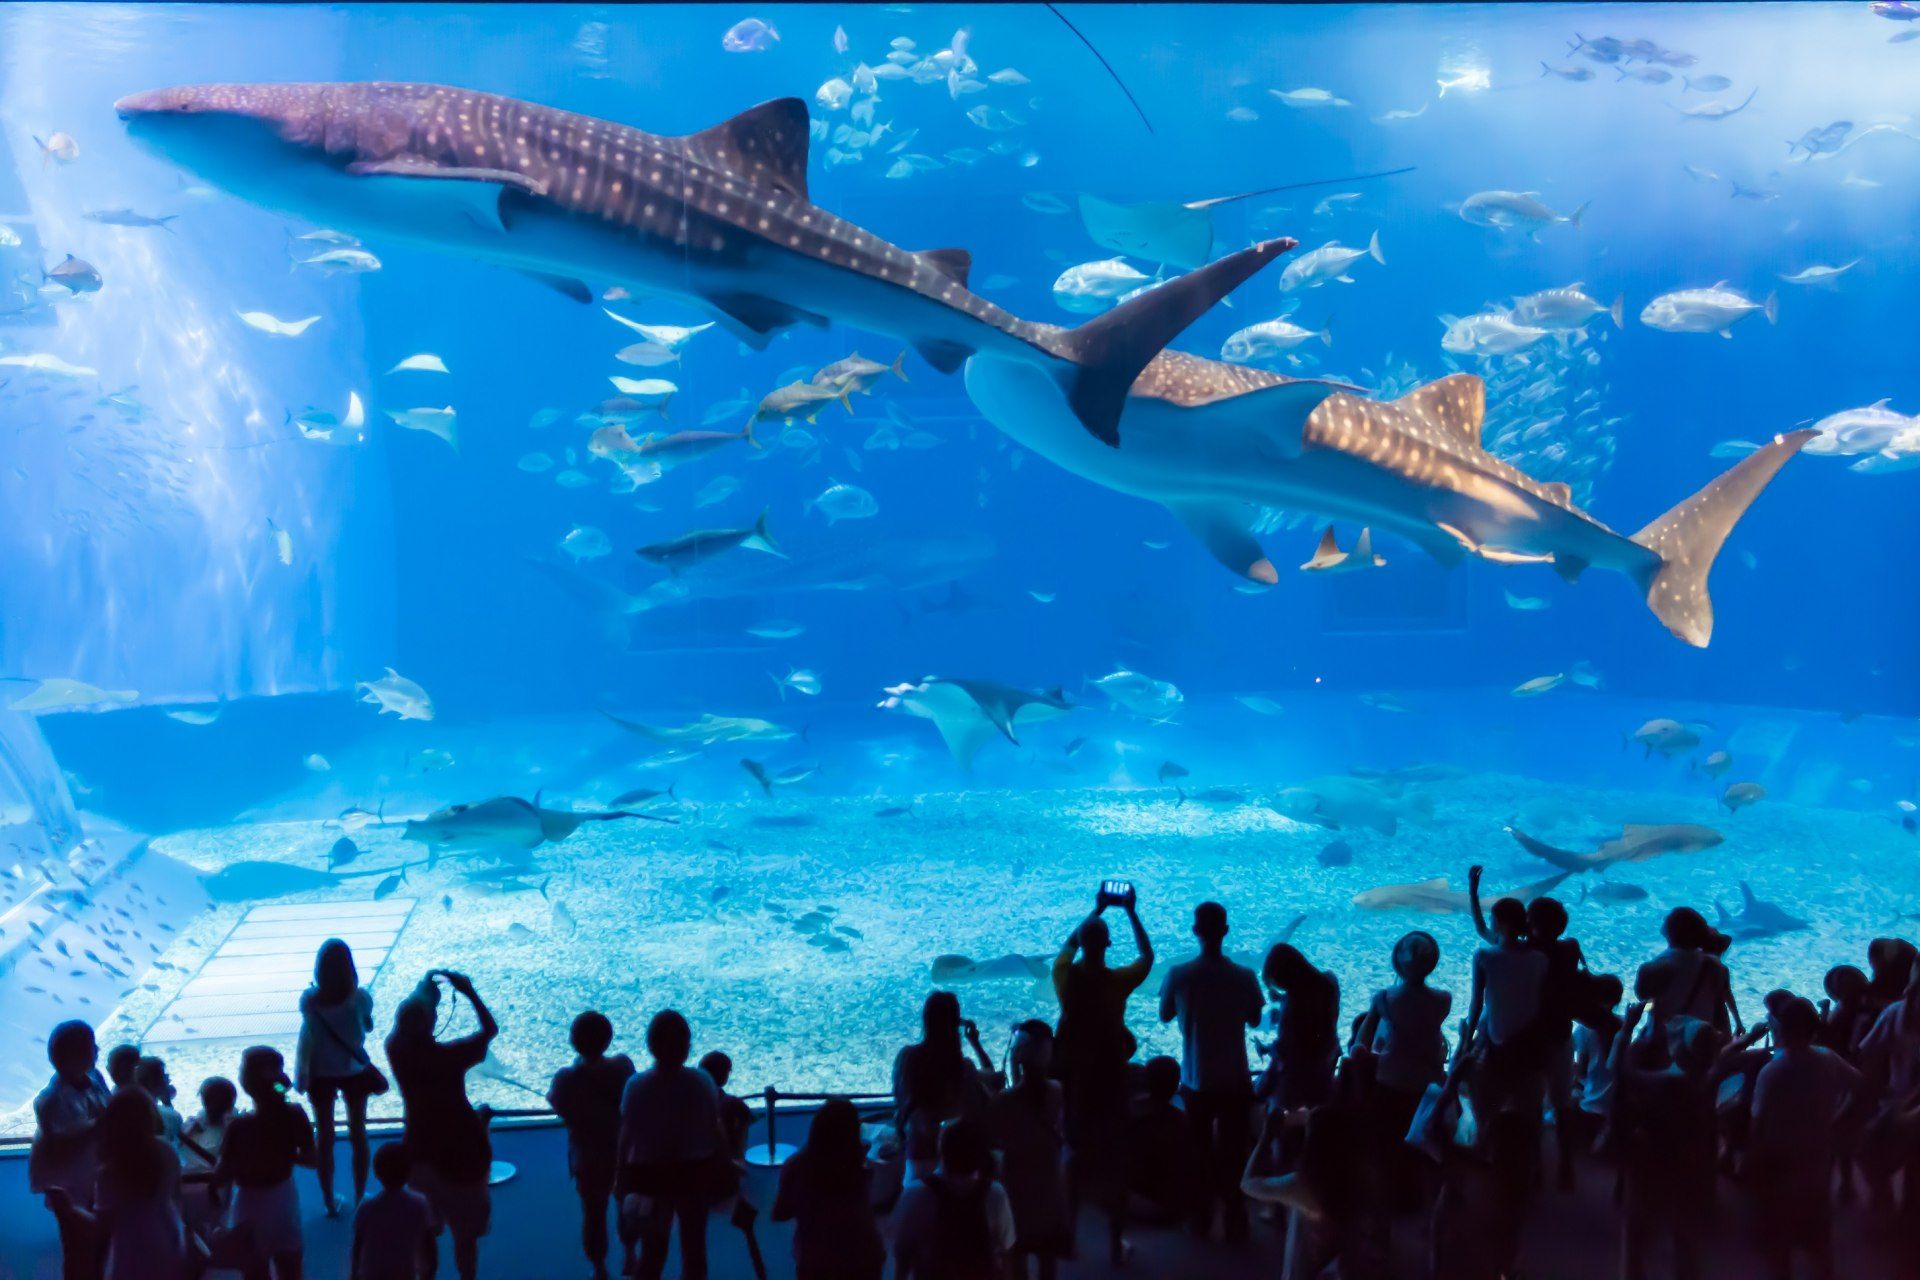 MoVe on 旅食: [沖繩]本部町美之海水族館(美ら海水族館).終於看到"黑潮之海"水槽的鯨鯊了~